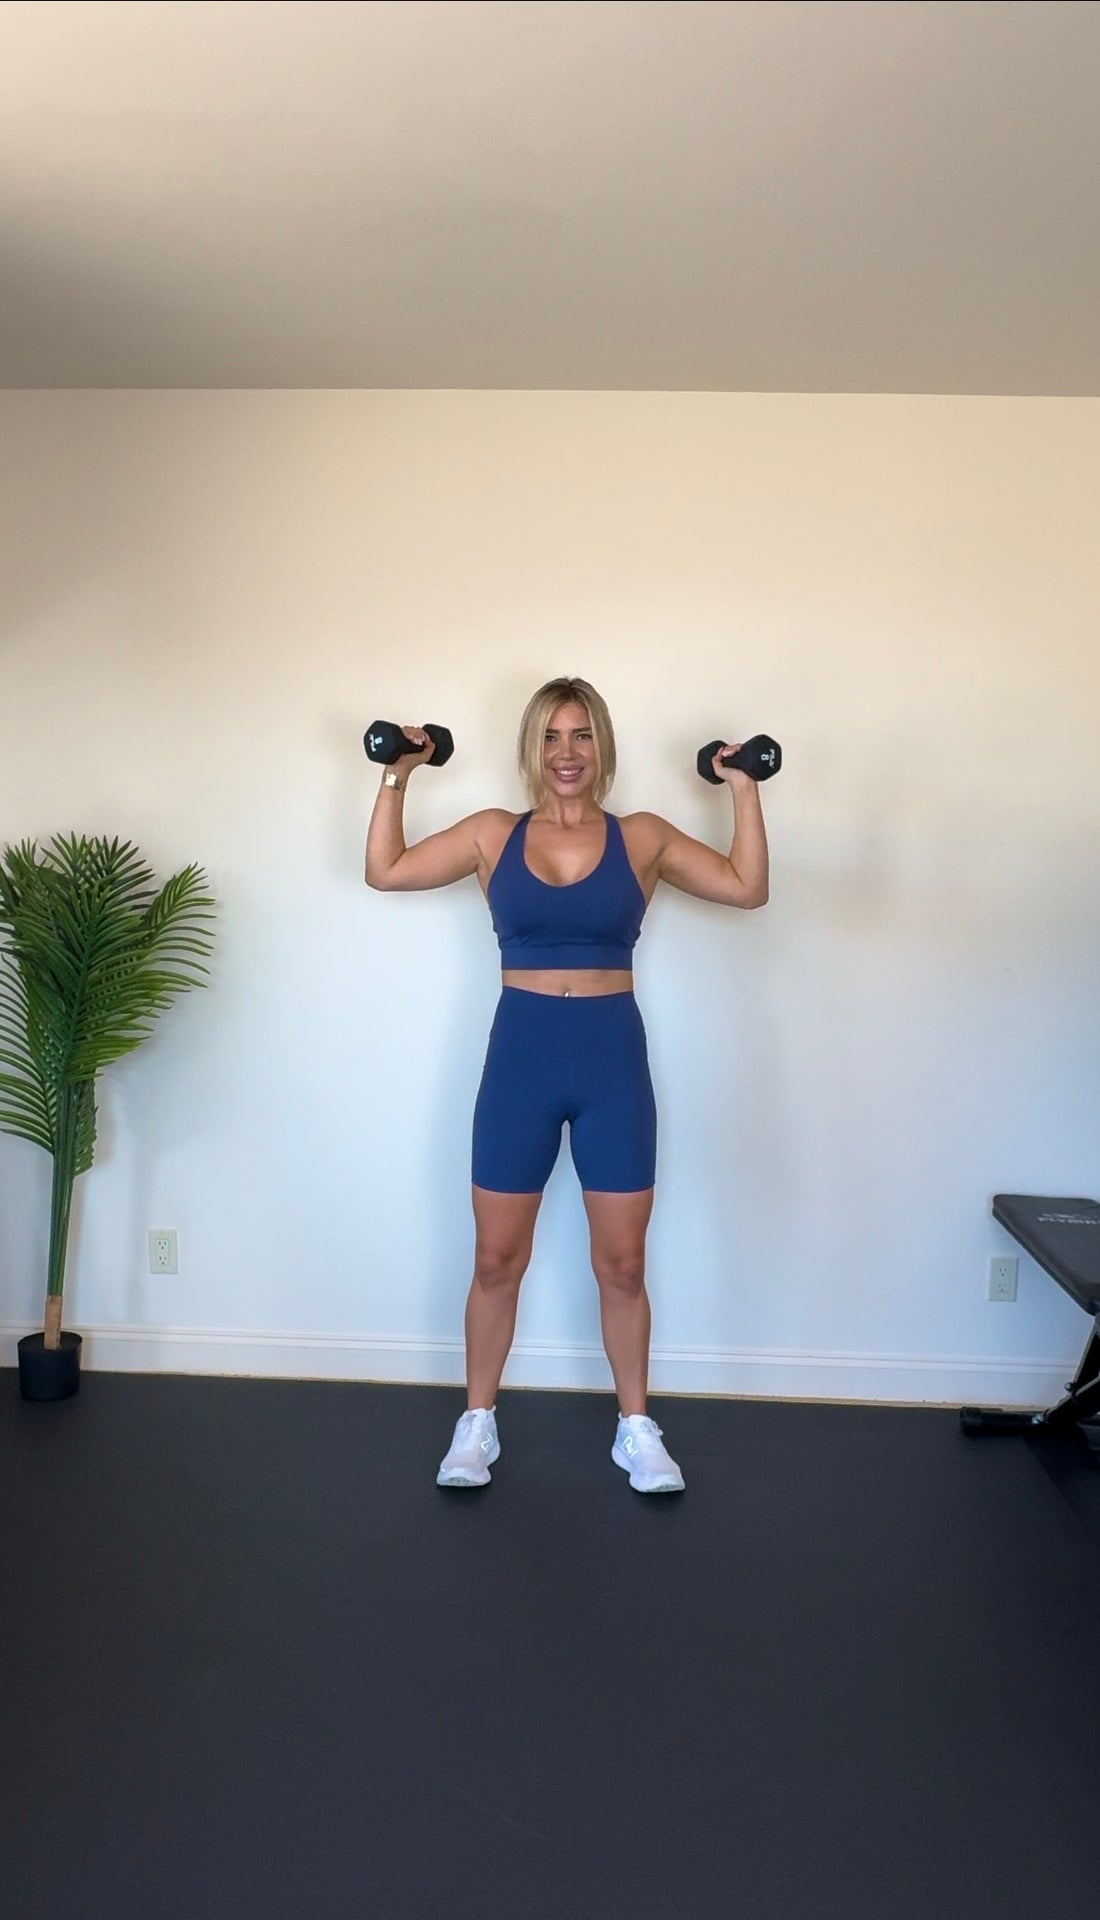 Full Body Workout - Dumbbells Only 🏋🏼‍♀️🔥